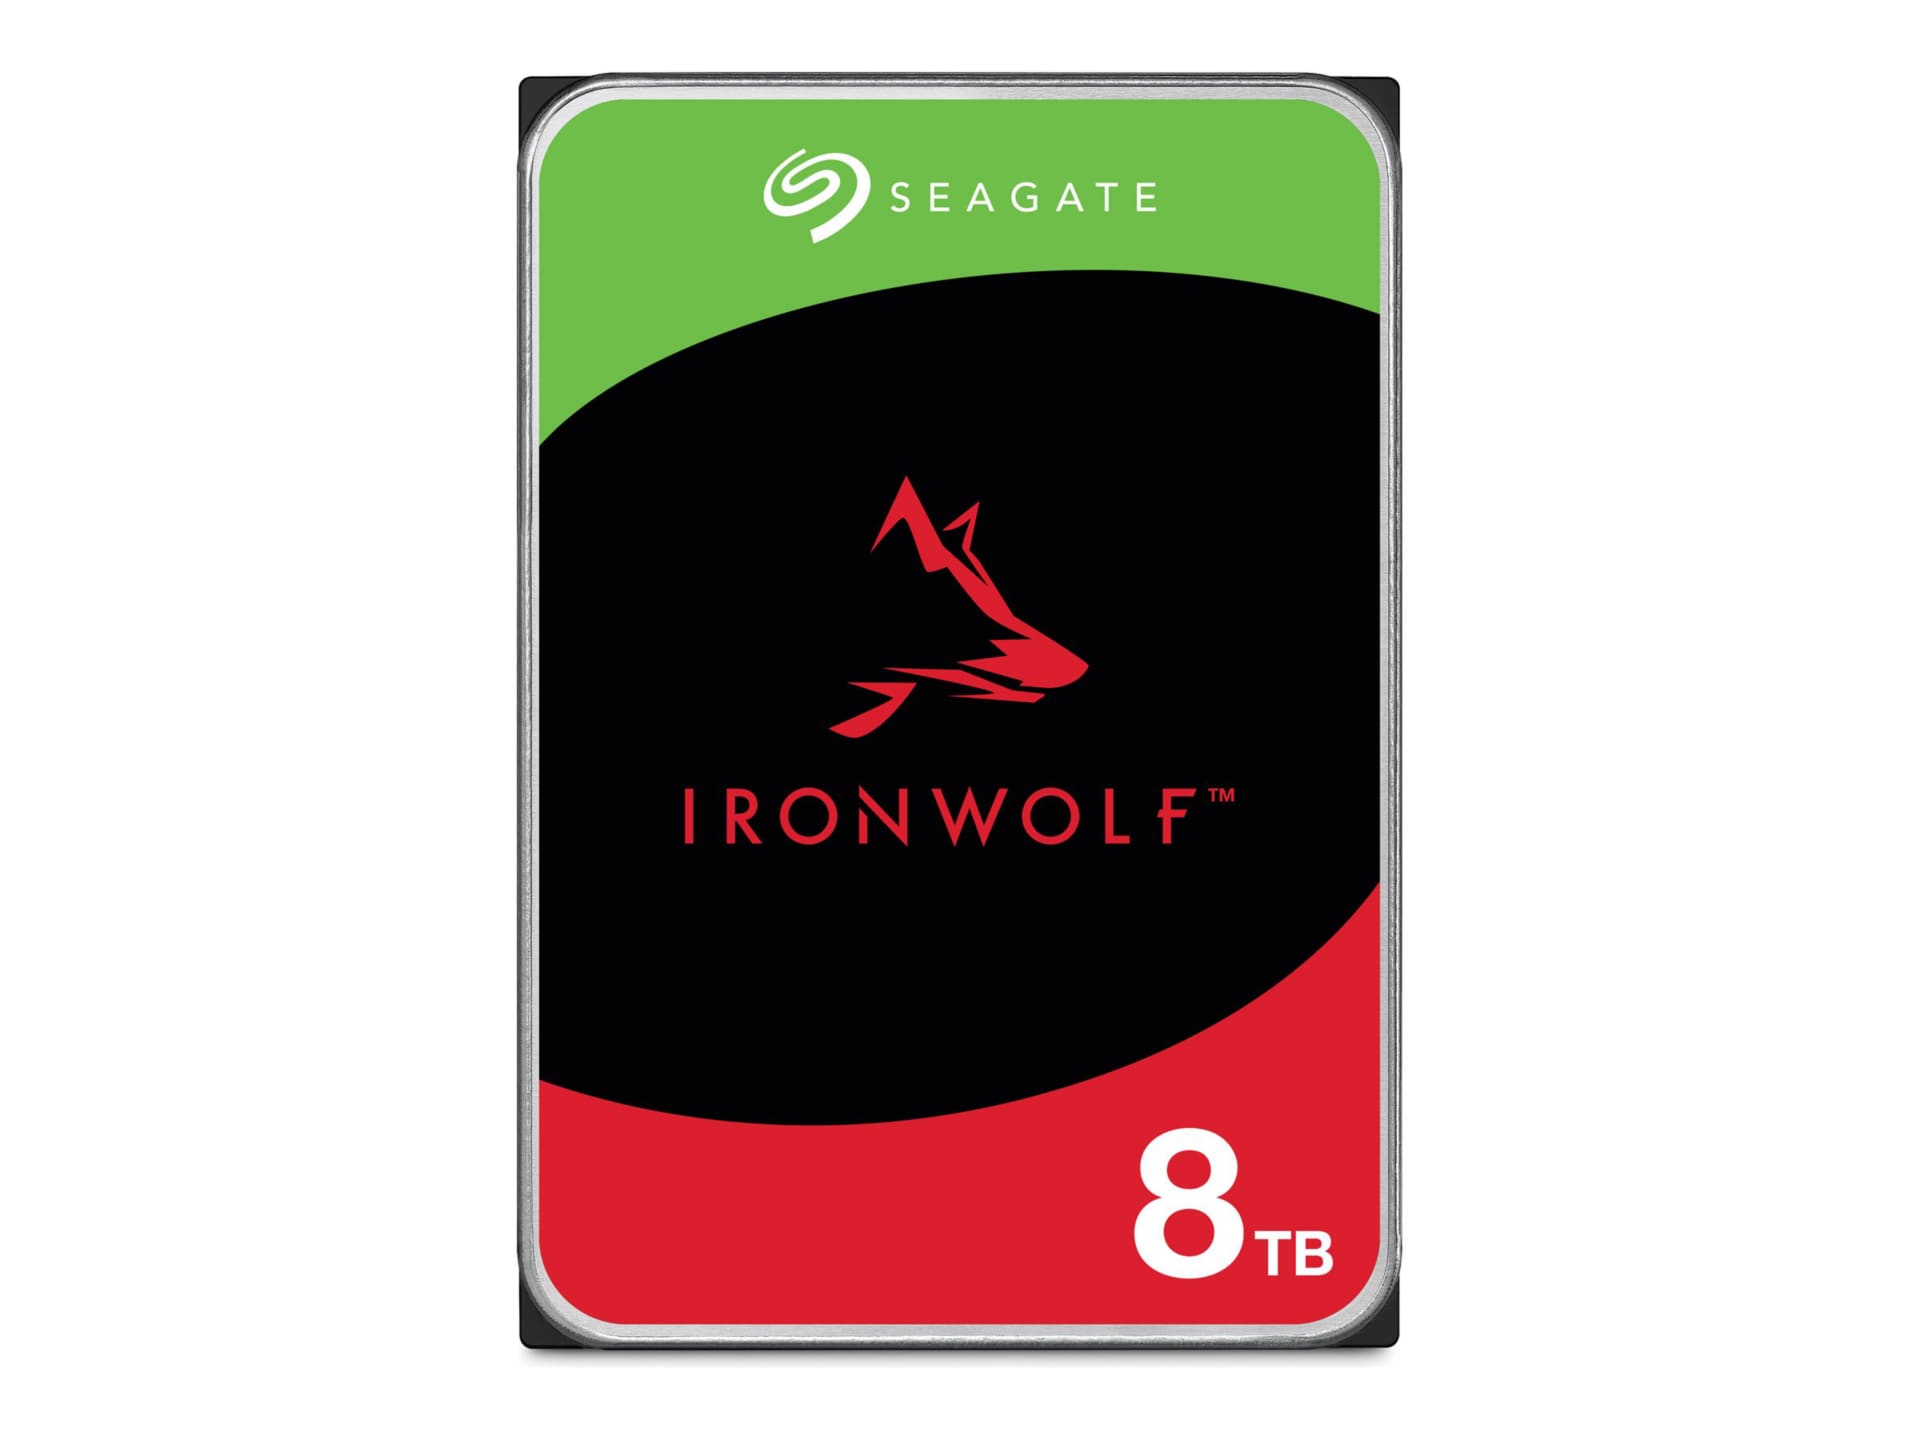 Seagate Ironwolf NAS SATA 8TB Hard Disk Drive